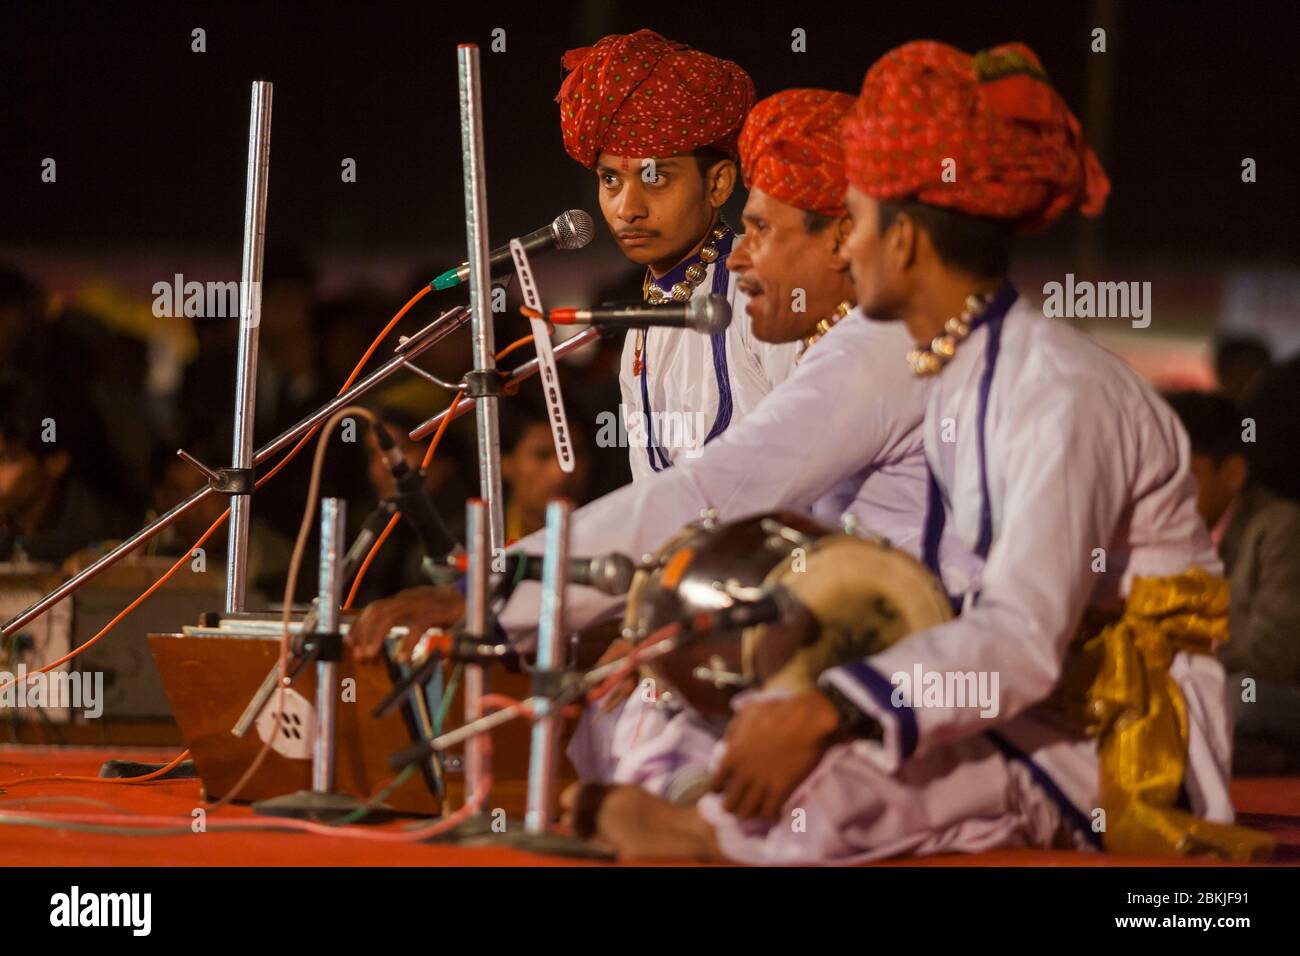 India, Rajasthan, Bikaner, Camel Festival, seated musicians singing, playing harmonium and mridangam percussions Stock Photo